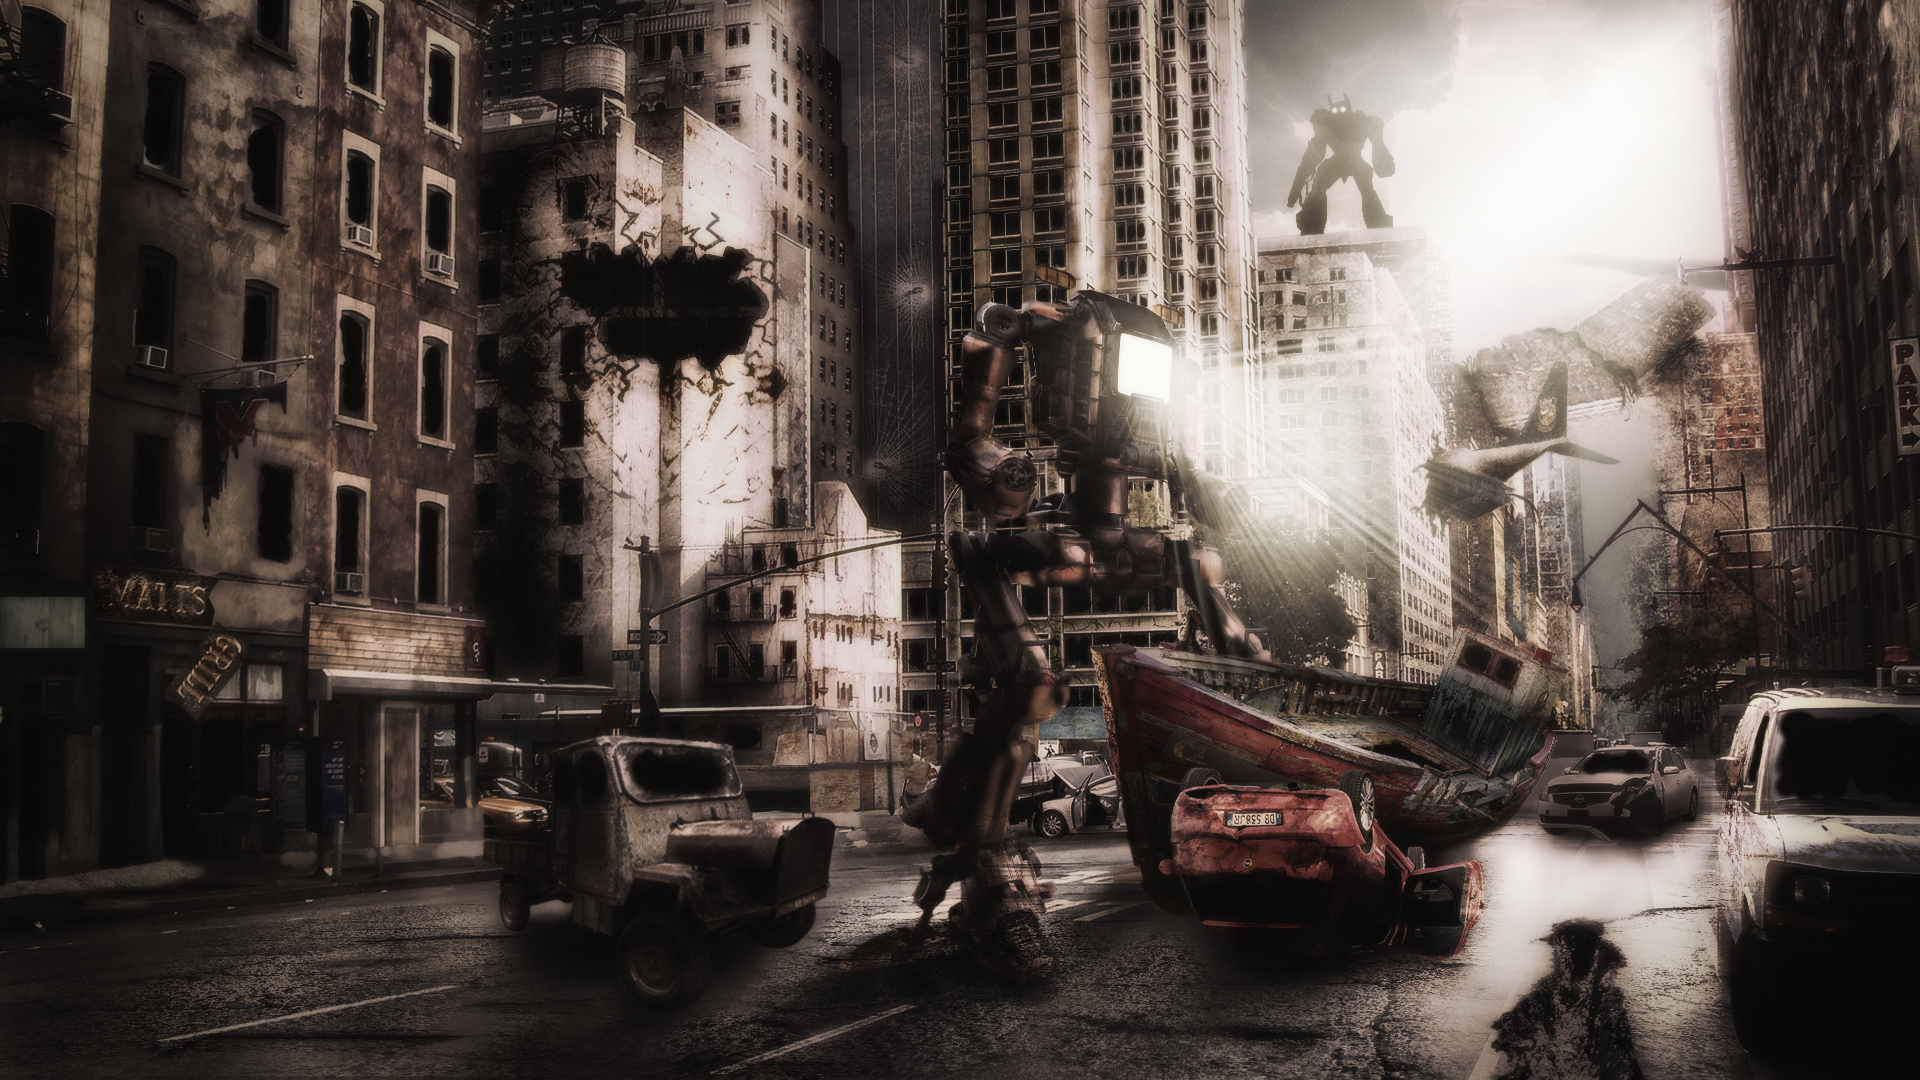 General 1920x1080 city cyborg robot apocalyptic futuristic